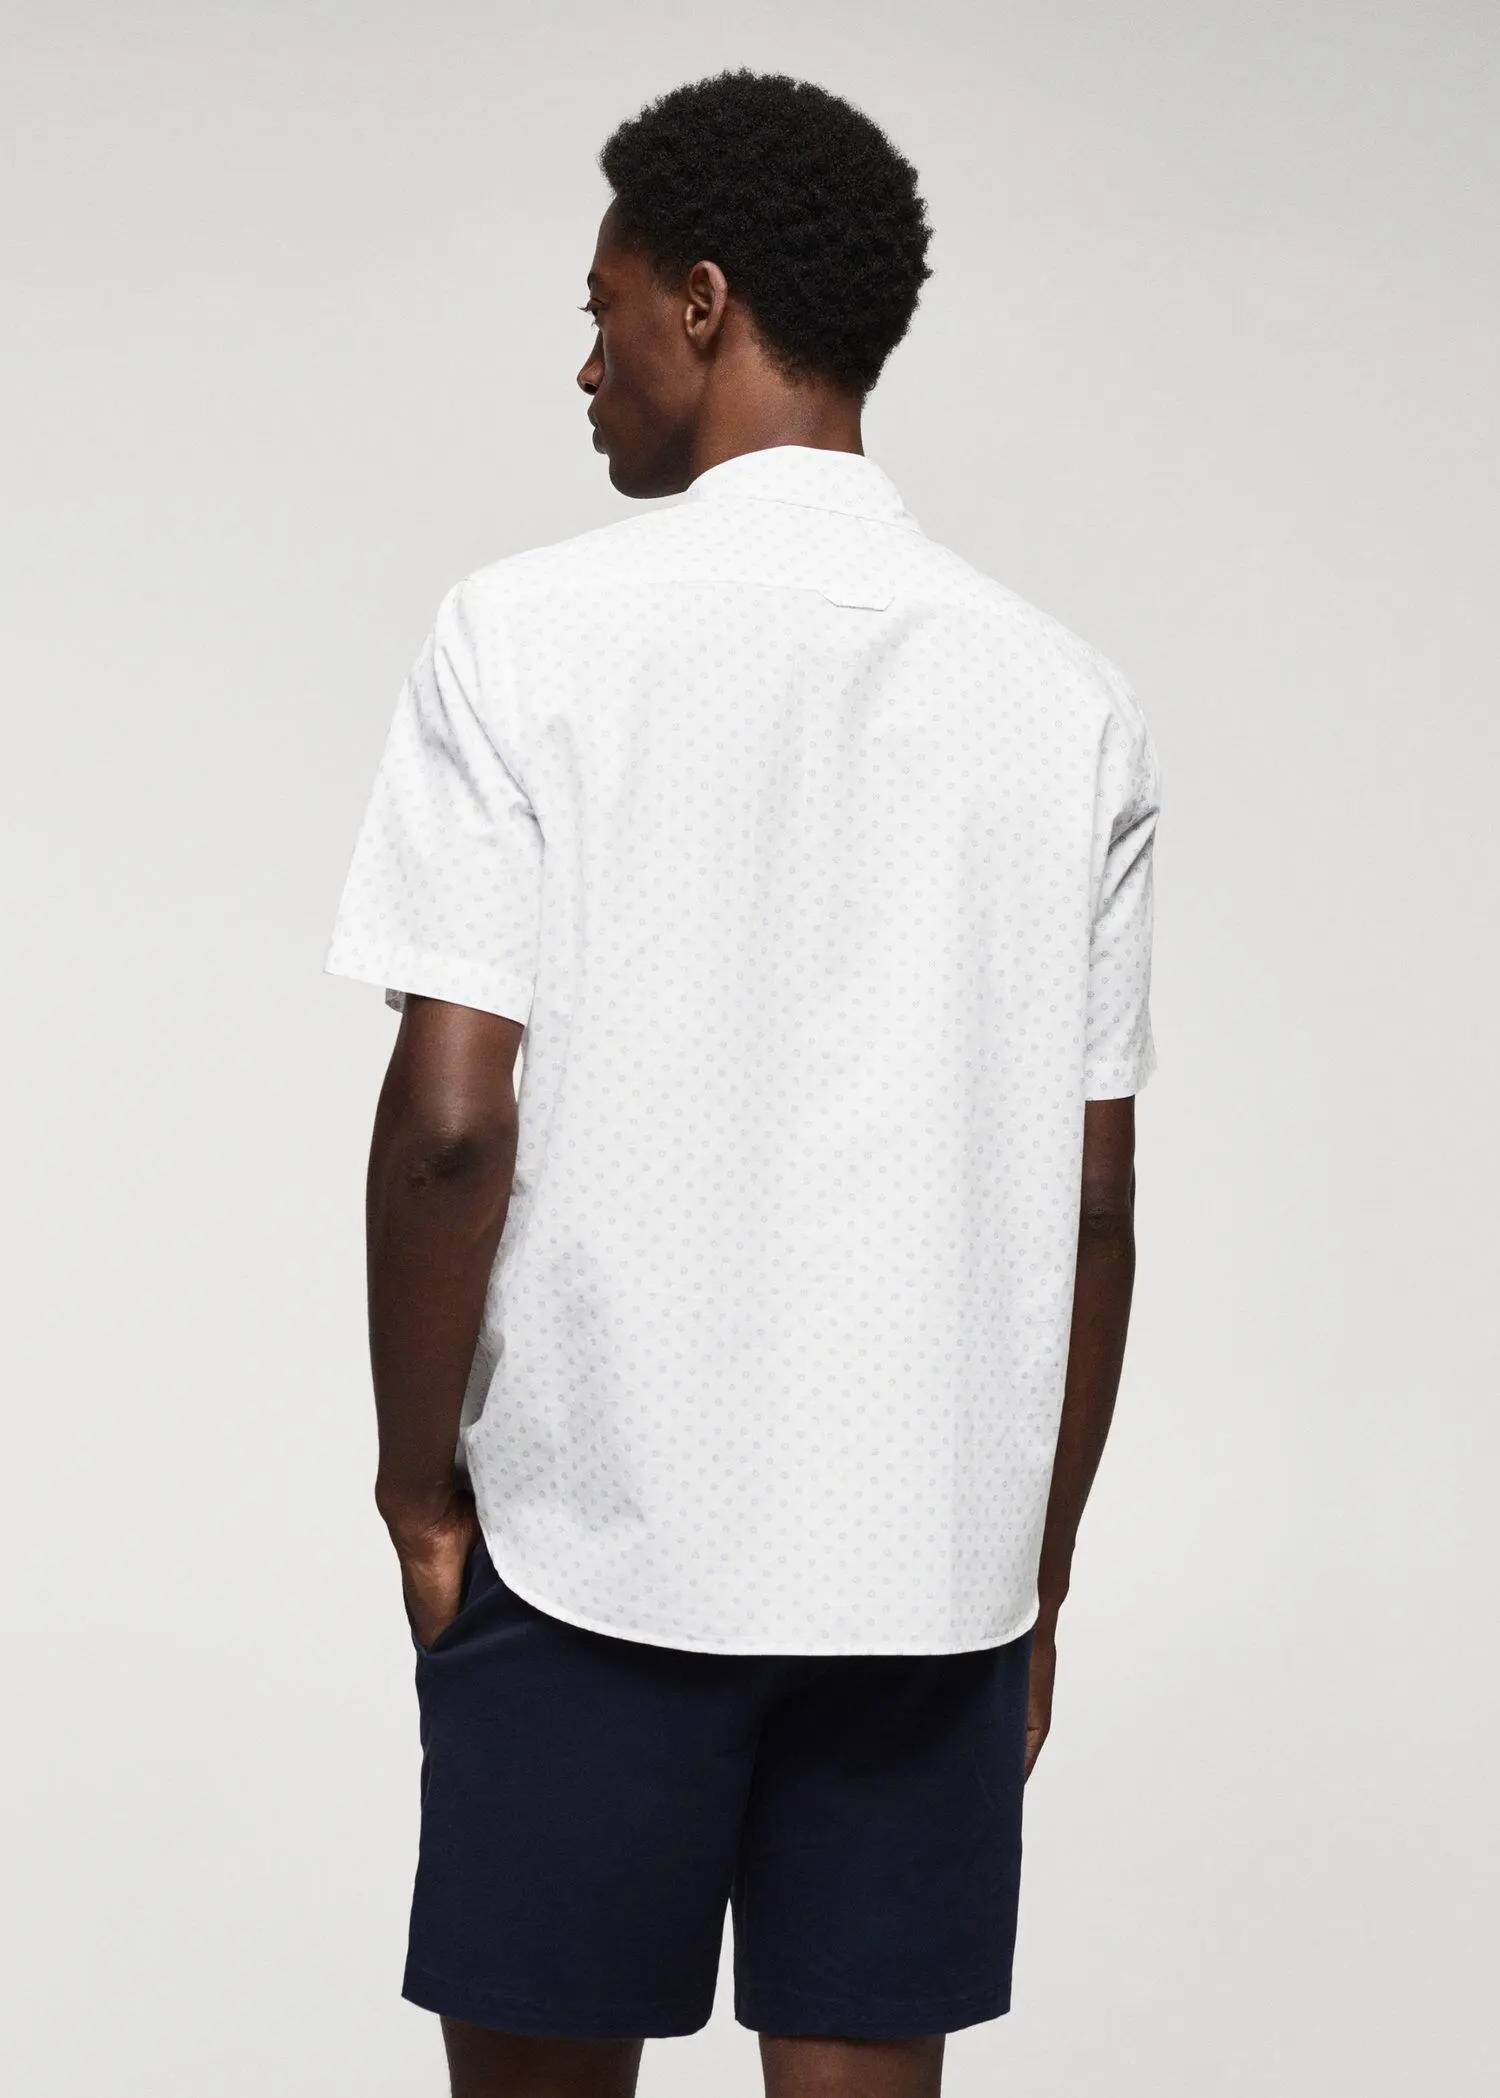 Mango 100% cotton short-sleeved mirco-patterned shirt. 3